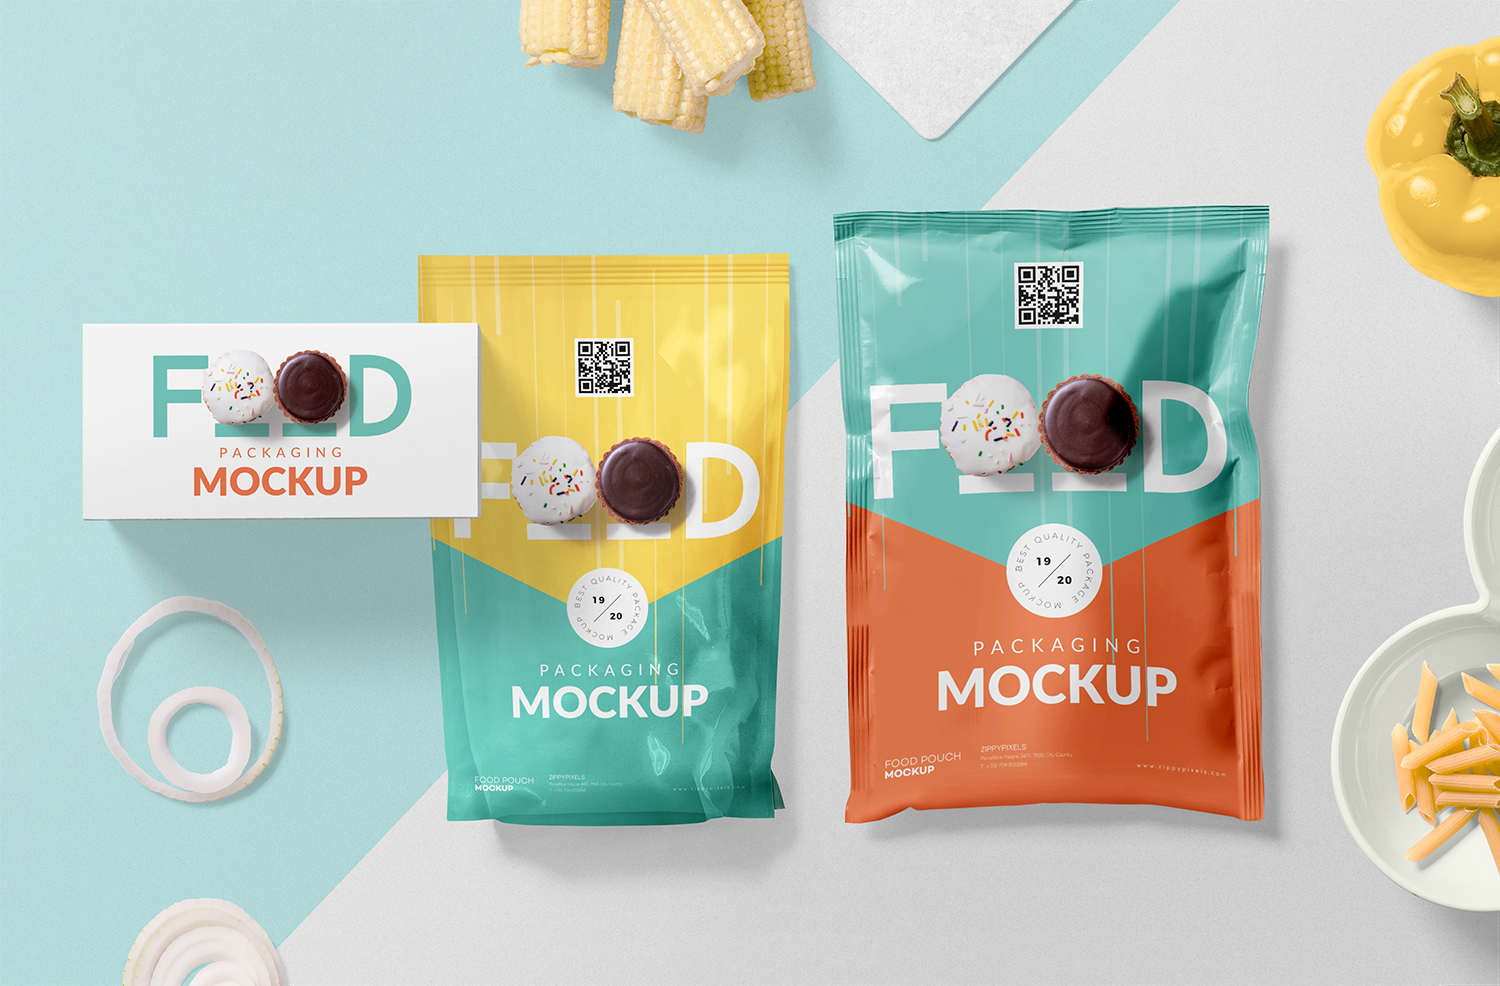 Download Free Food Packaging Mockup PSD | Free Mockup